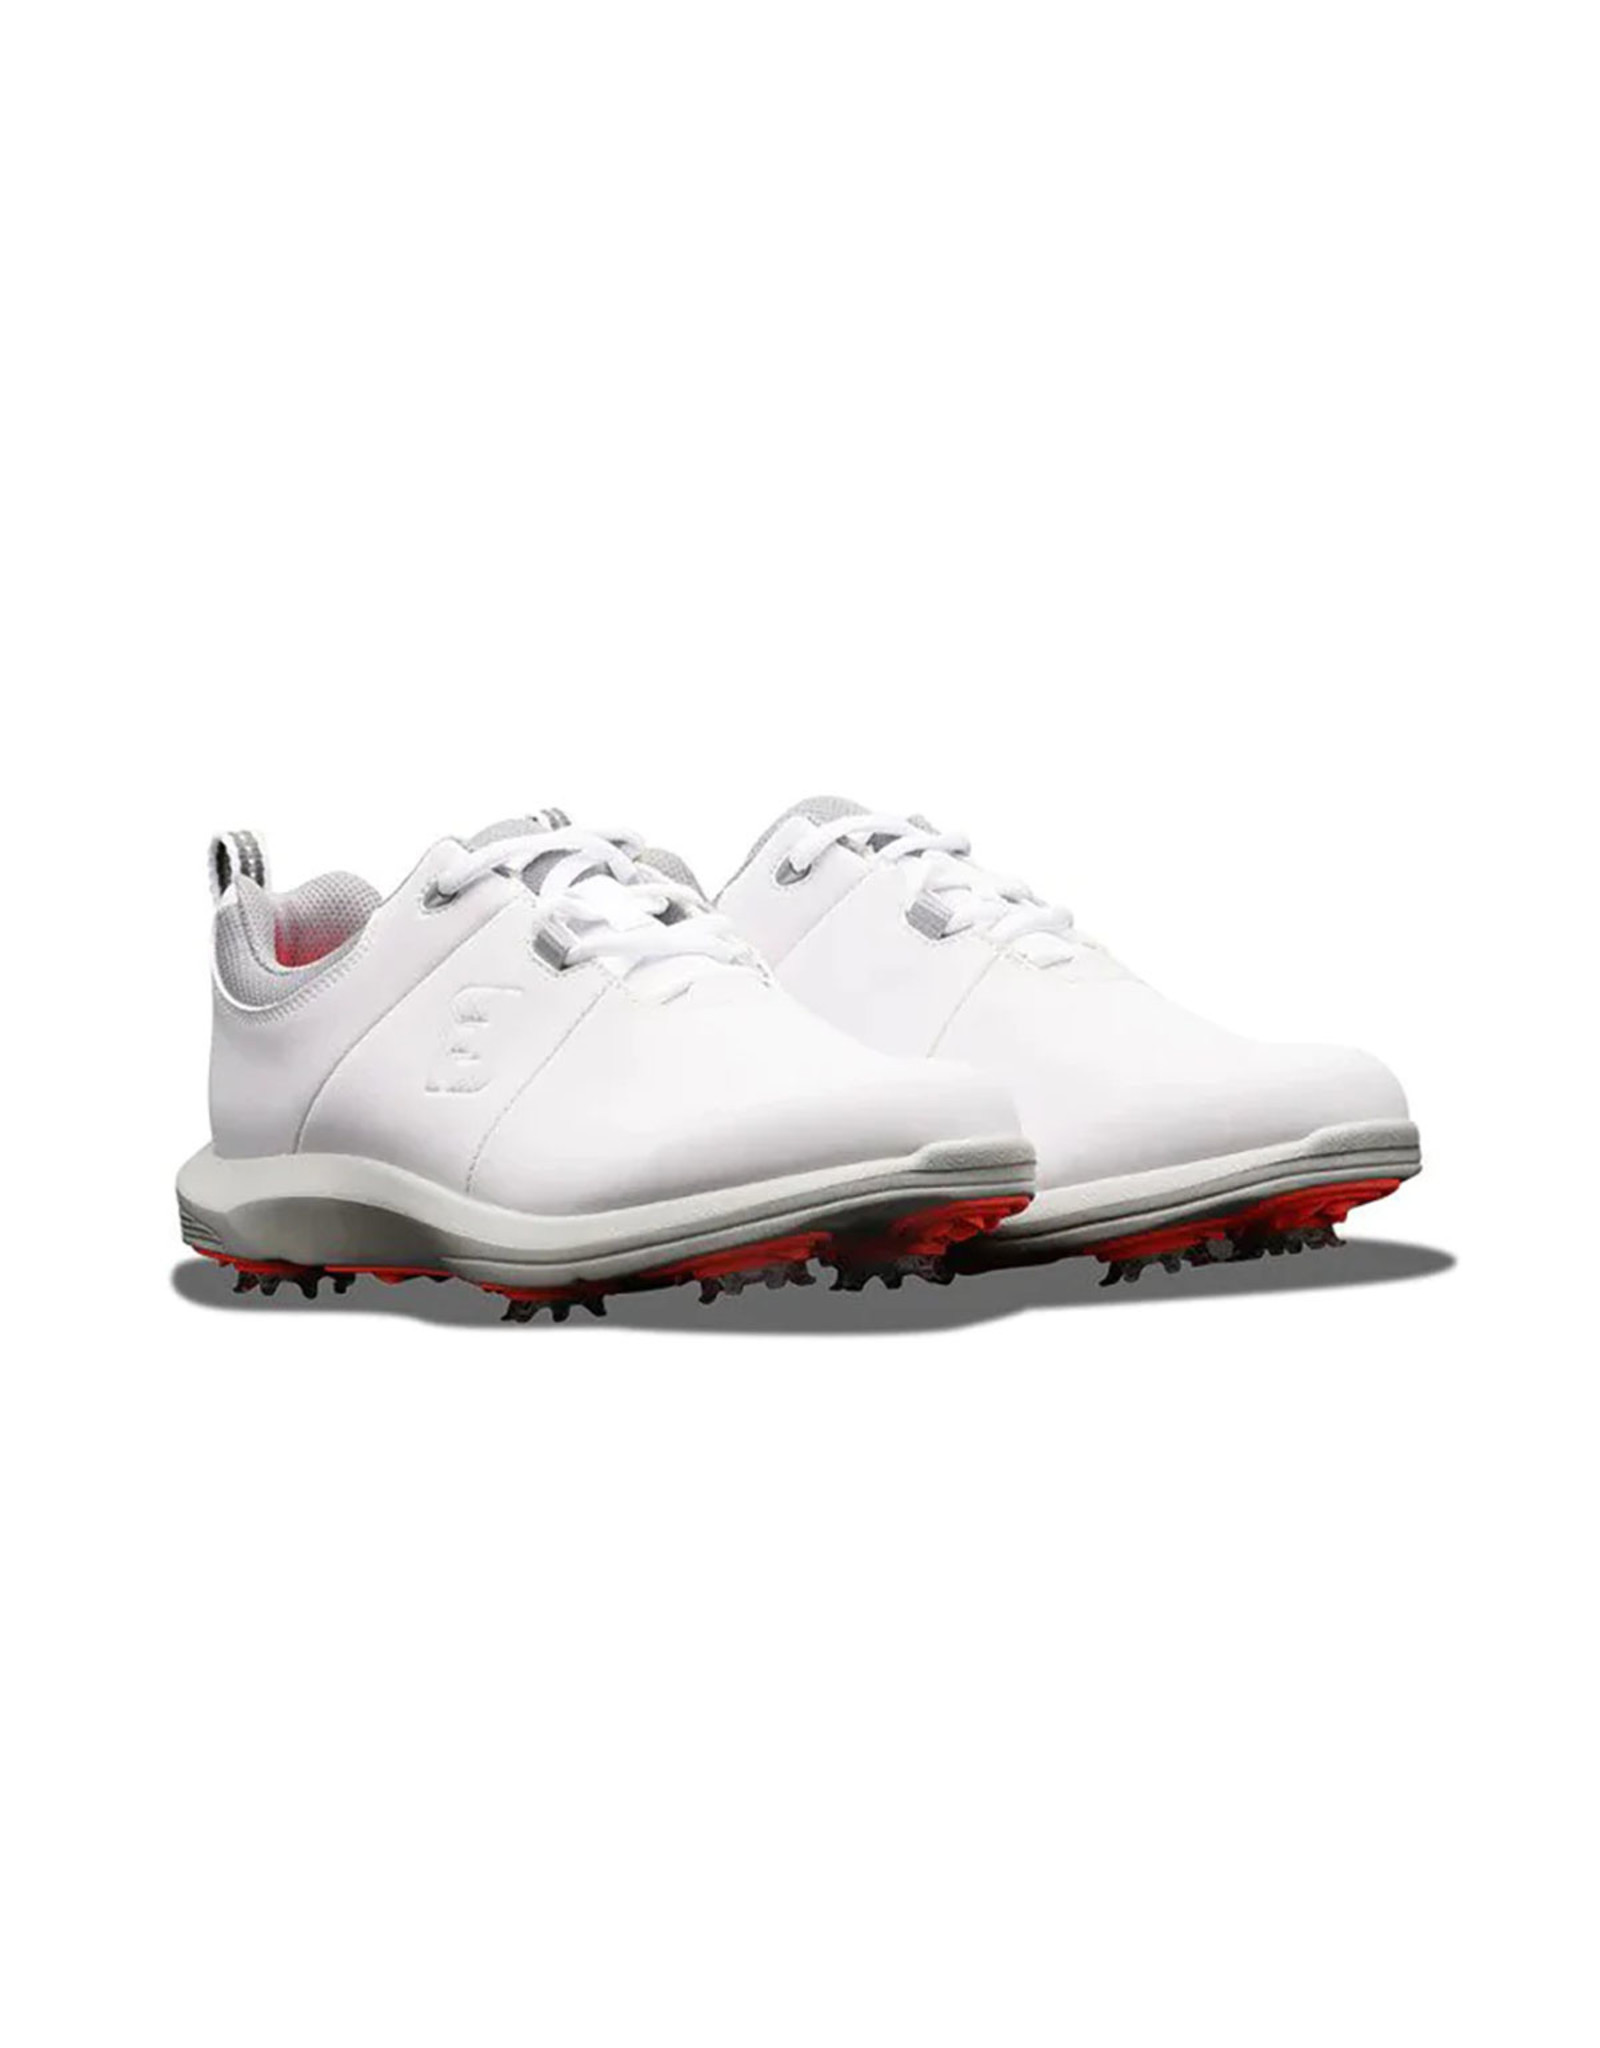 FootJoy FootJoy Women's eComfort White Golf Shoes